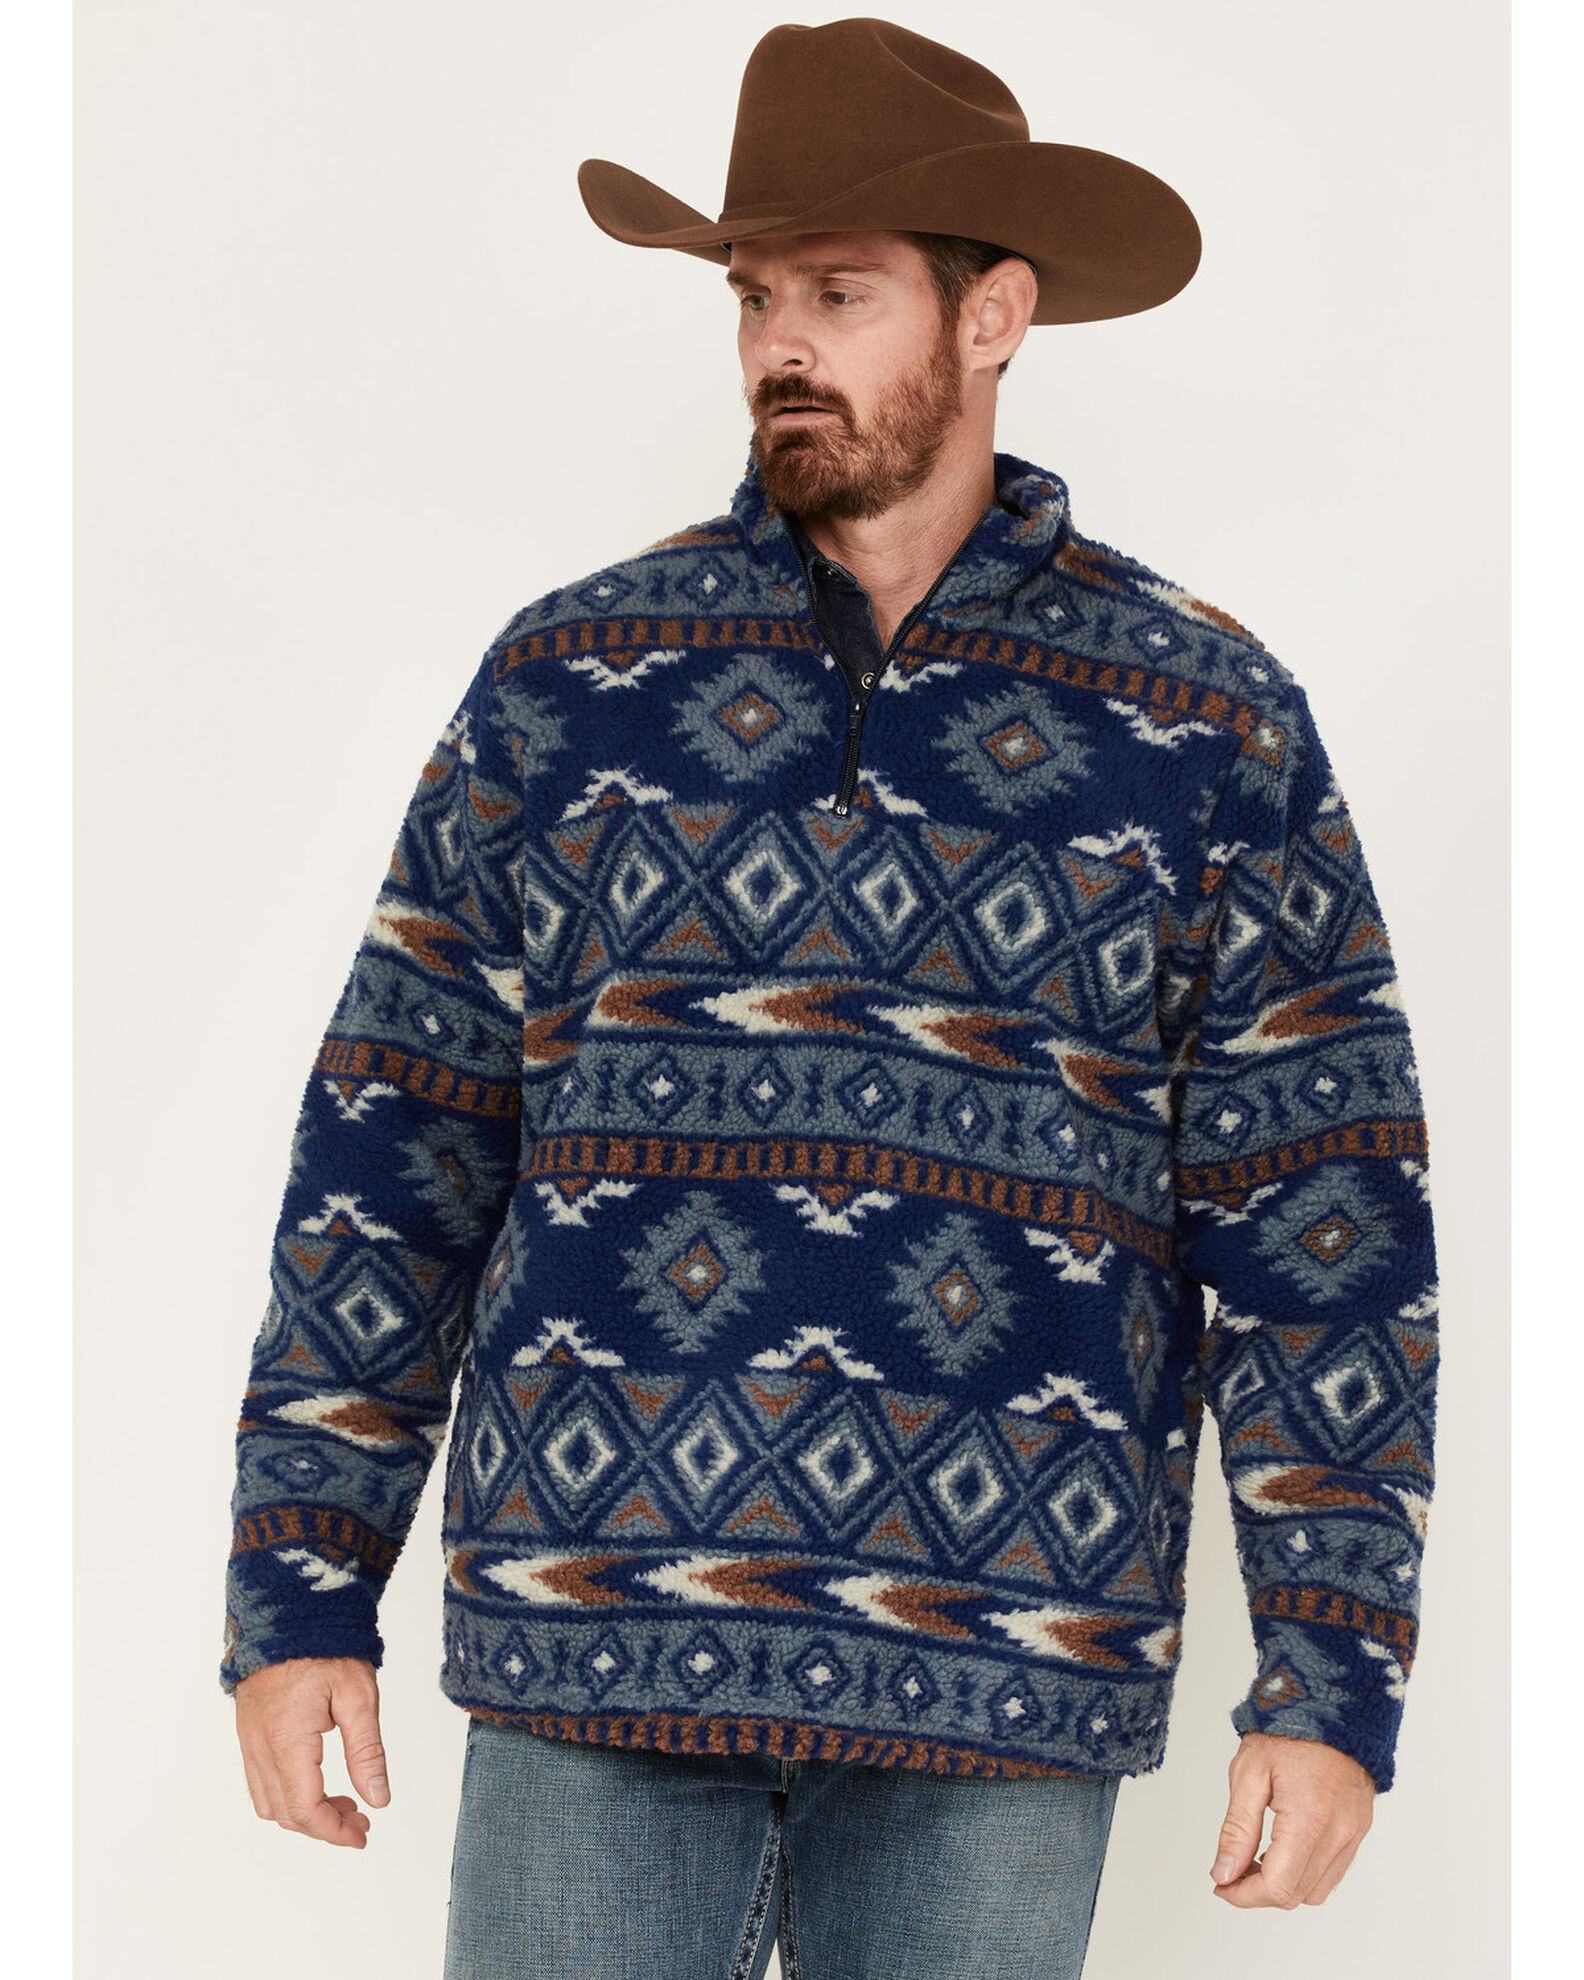 Wrangler Men's Southwestern Print 1/4 Zip Pullover - Country Outfitter